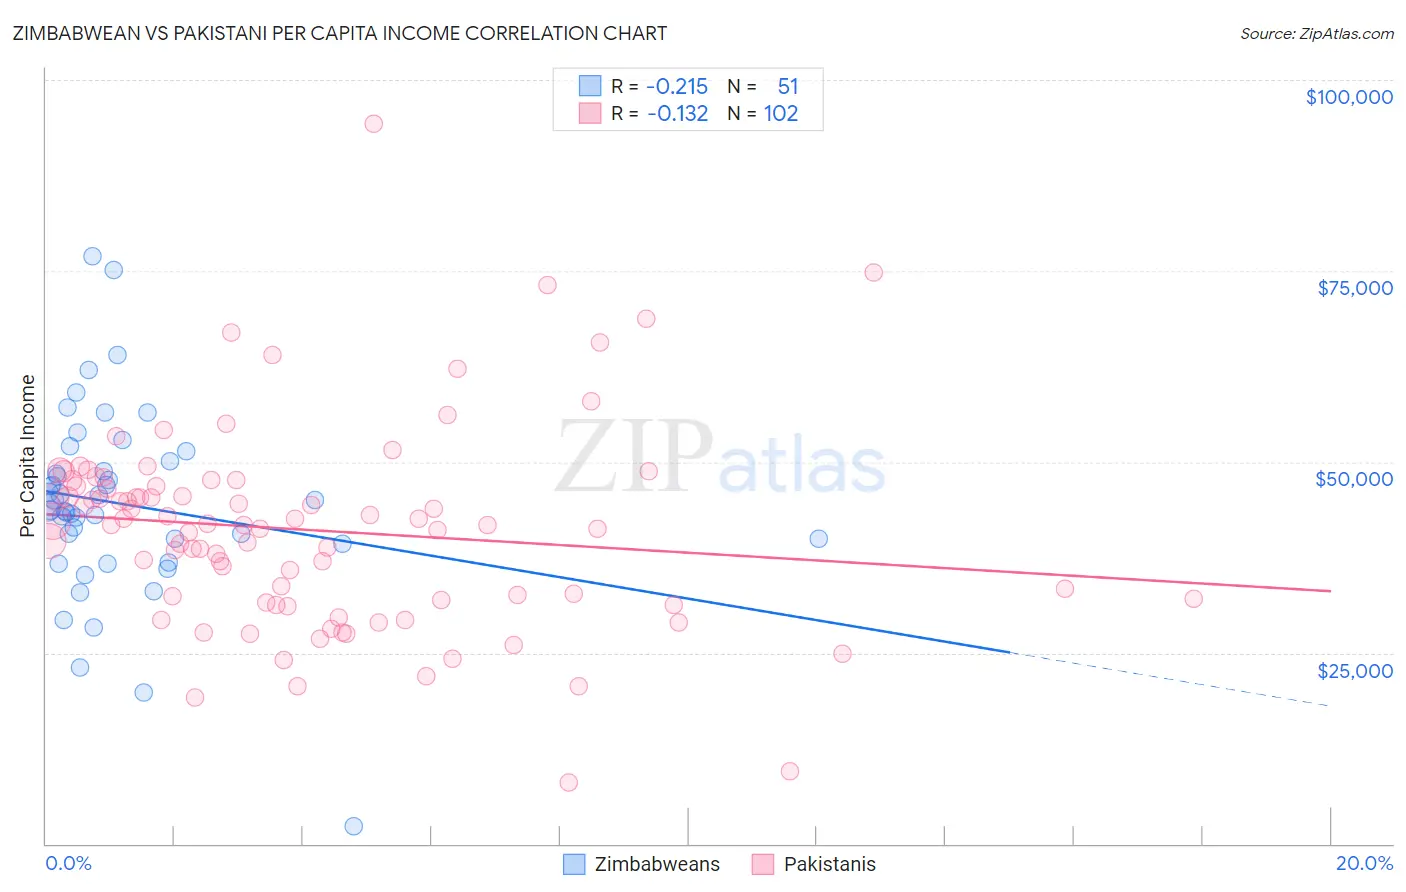 Zimbabwean vs Pakistani Per Capita Income